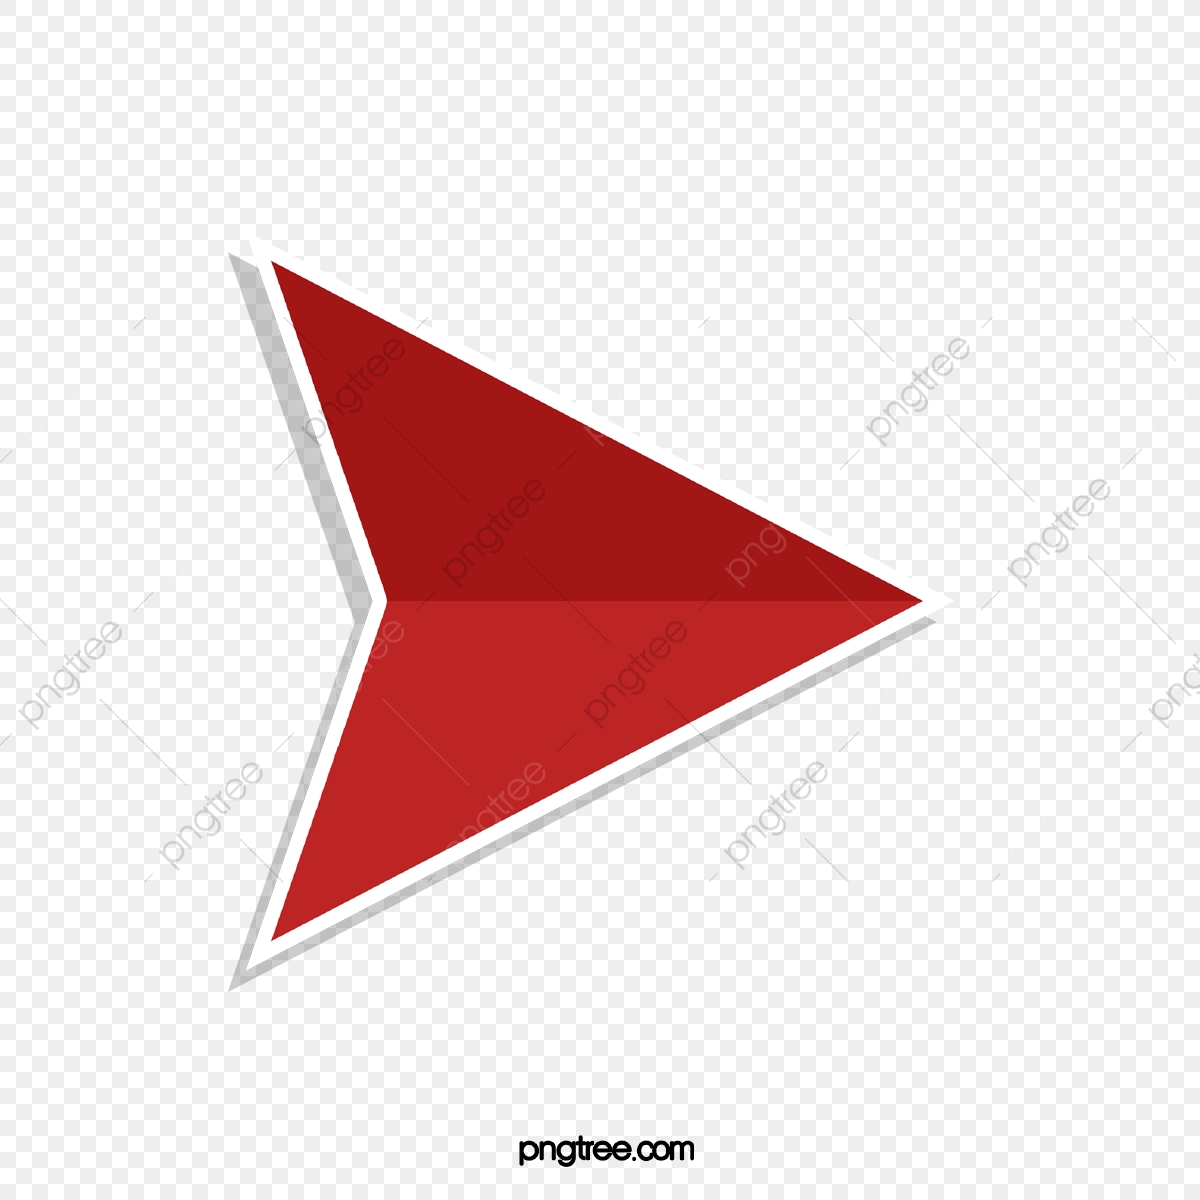 pngtree-red-arrowhead-png-image_3534821.jpg - 142.20 kB